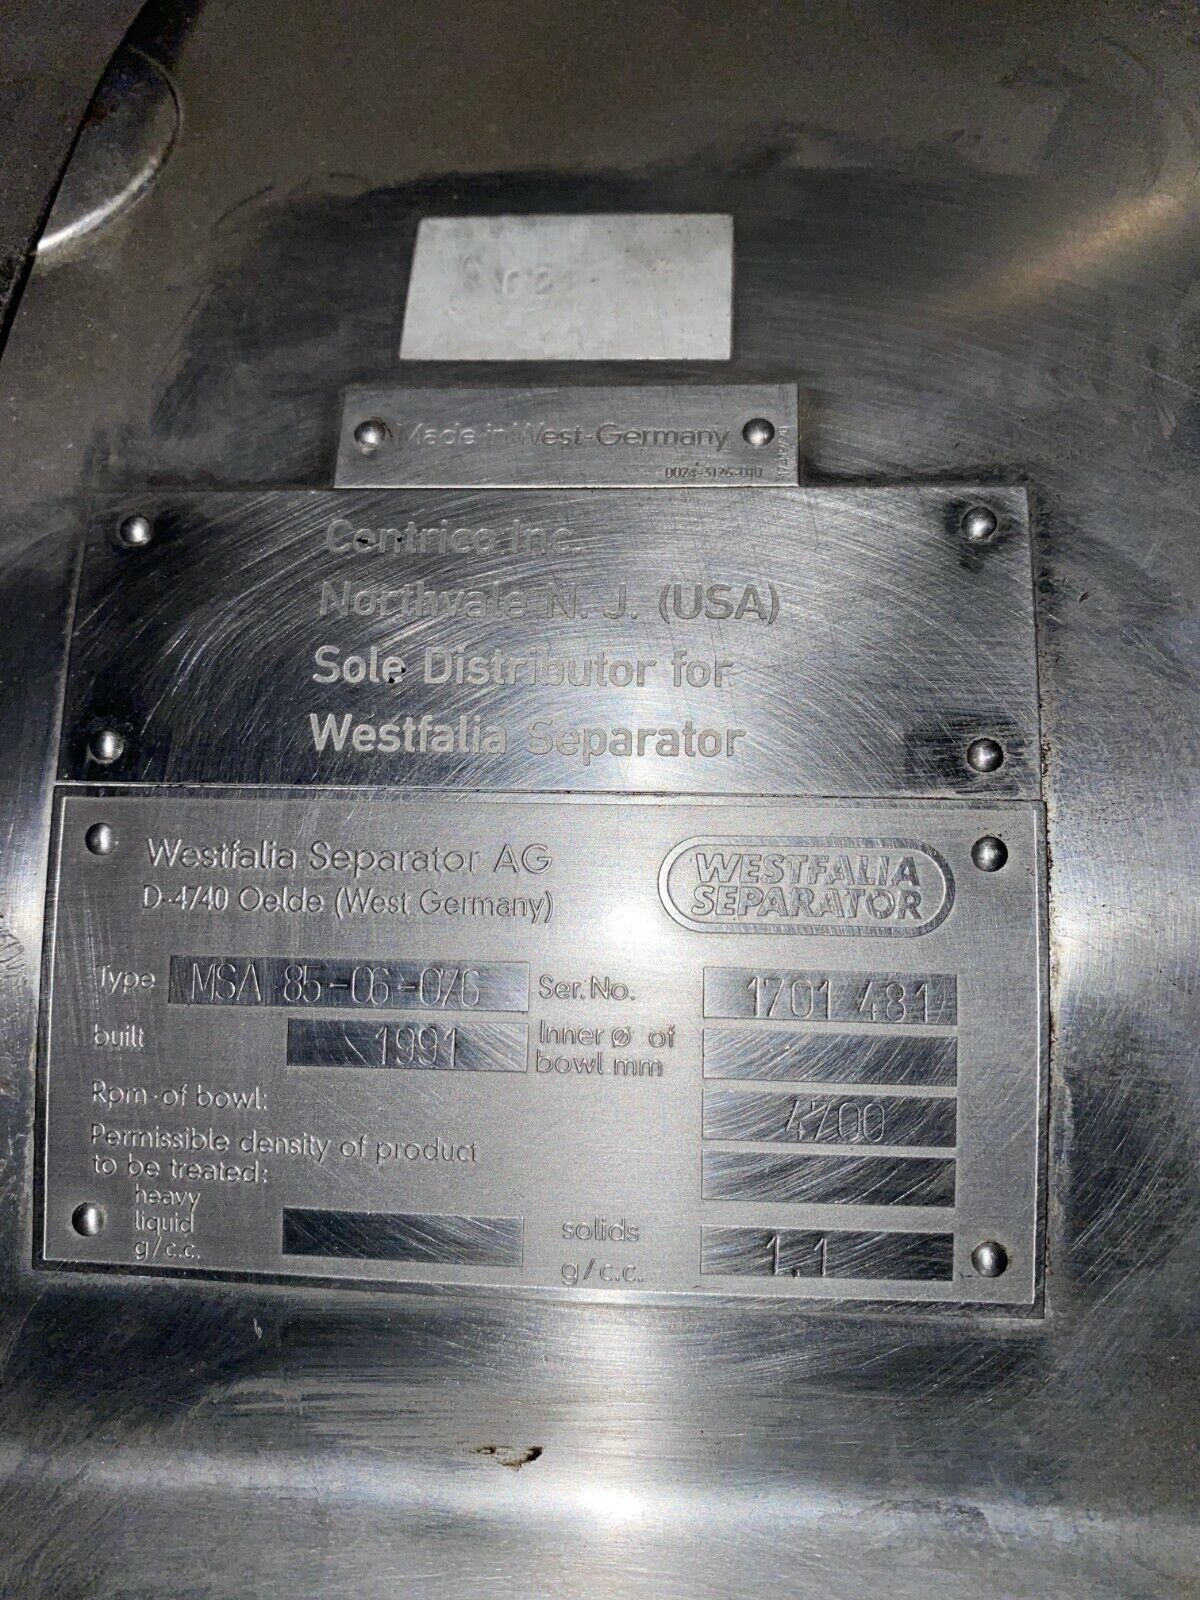 Westfalia Clarifier Centrifuge  Без бренда MSA 85-06-076 - фотография #7